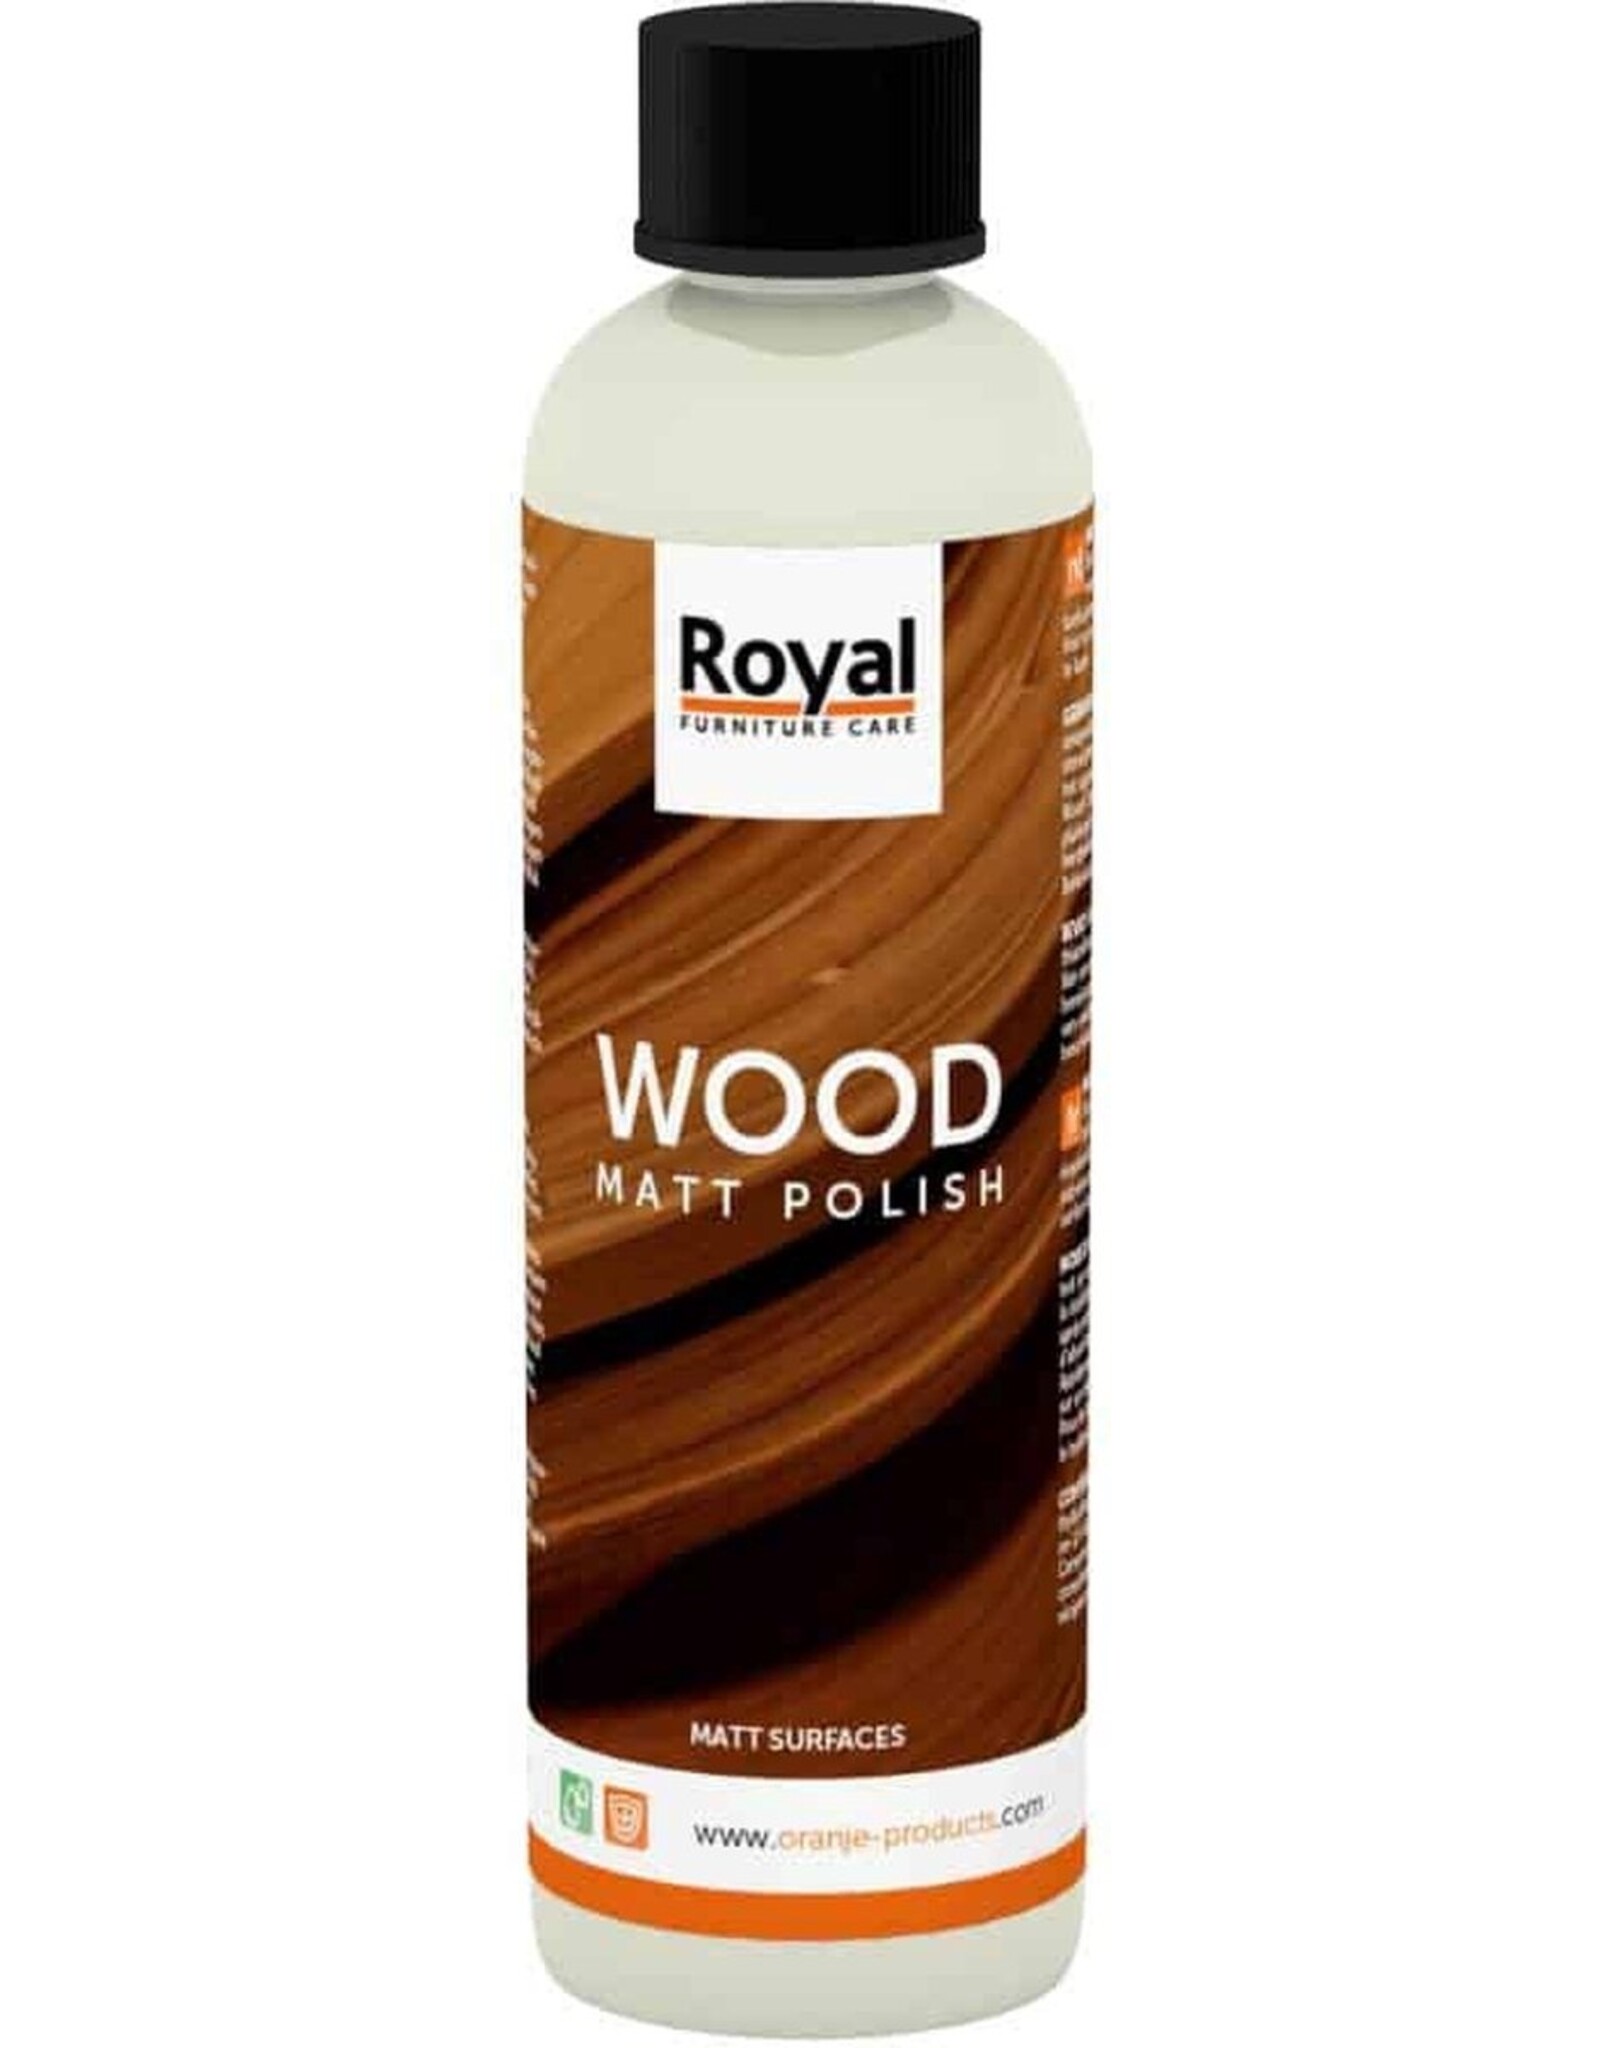 Royal Furniture care Royal Wood Matt Polish